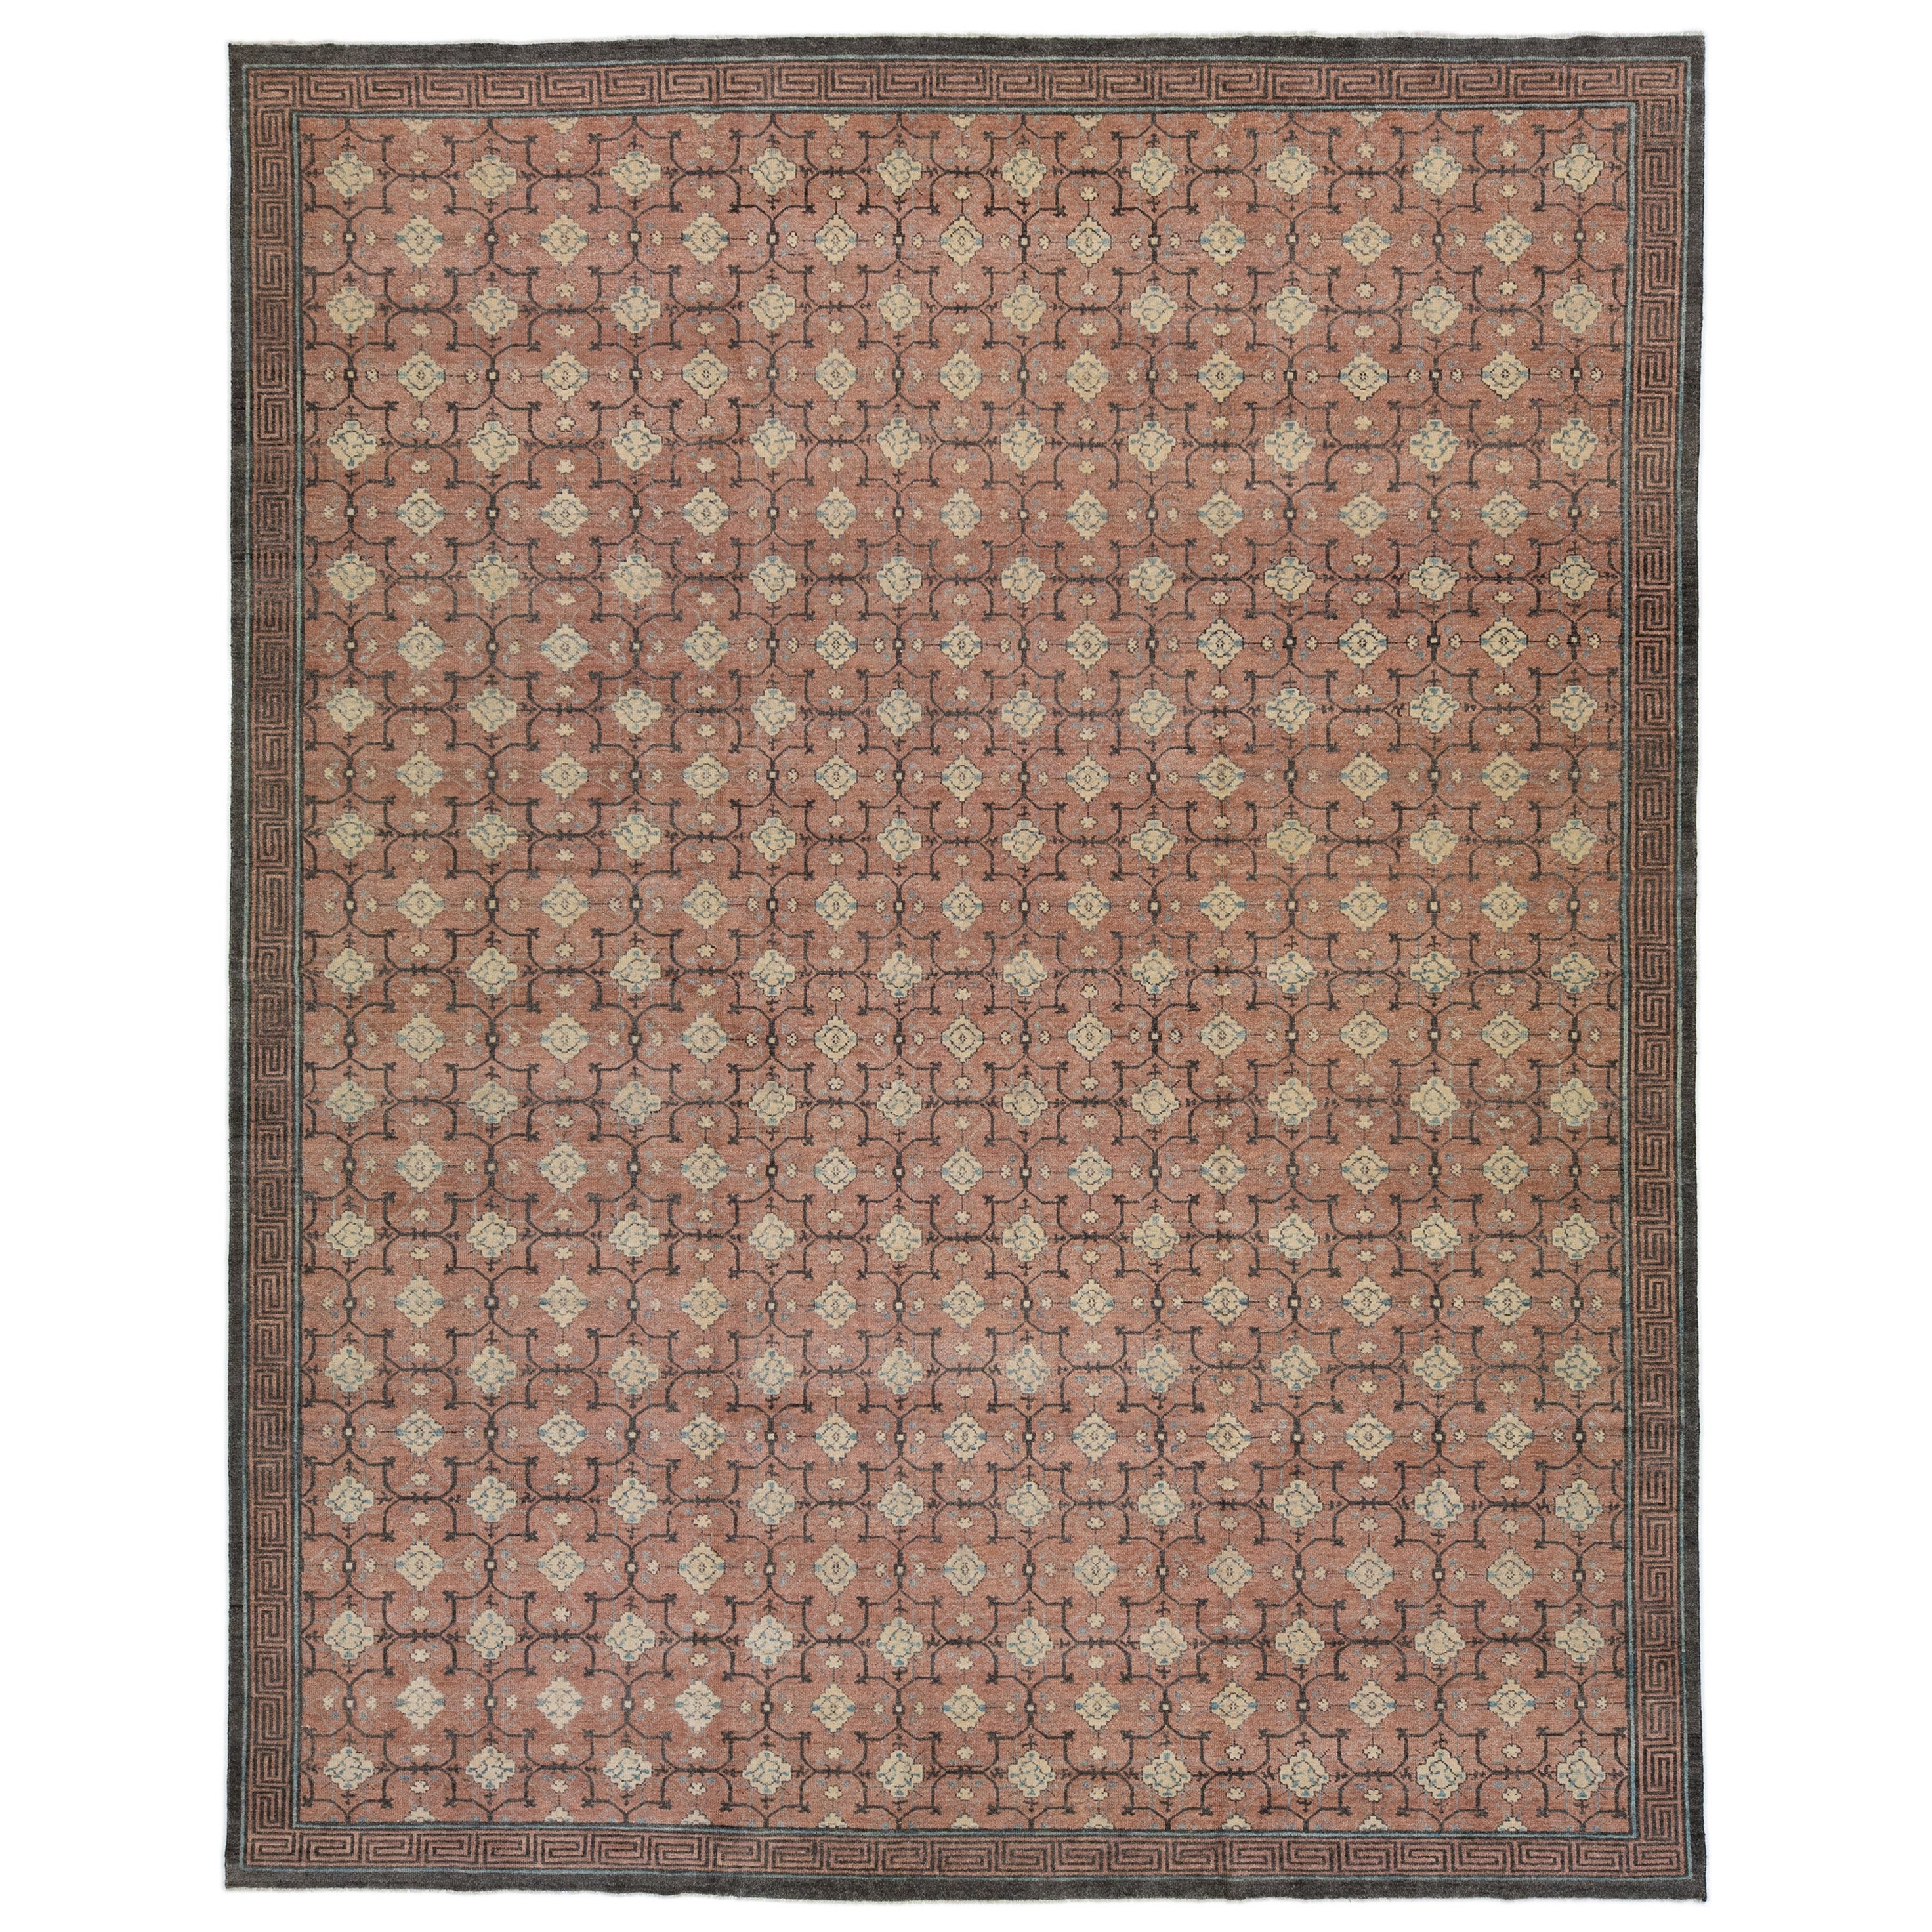 Handmade Khotan Style Modern Wool Rug With Geometric Design In Brown